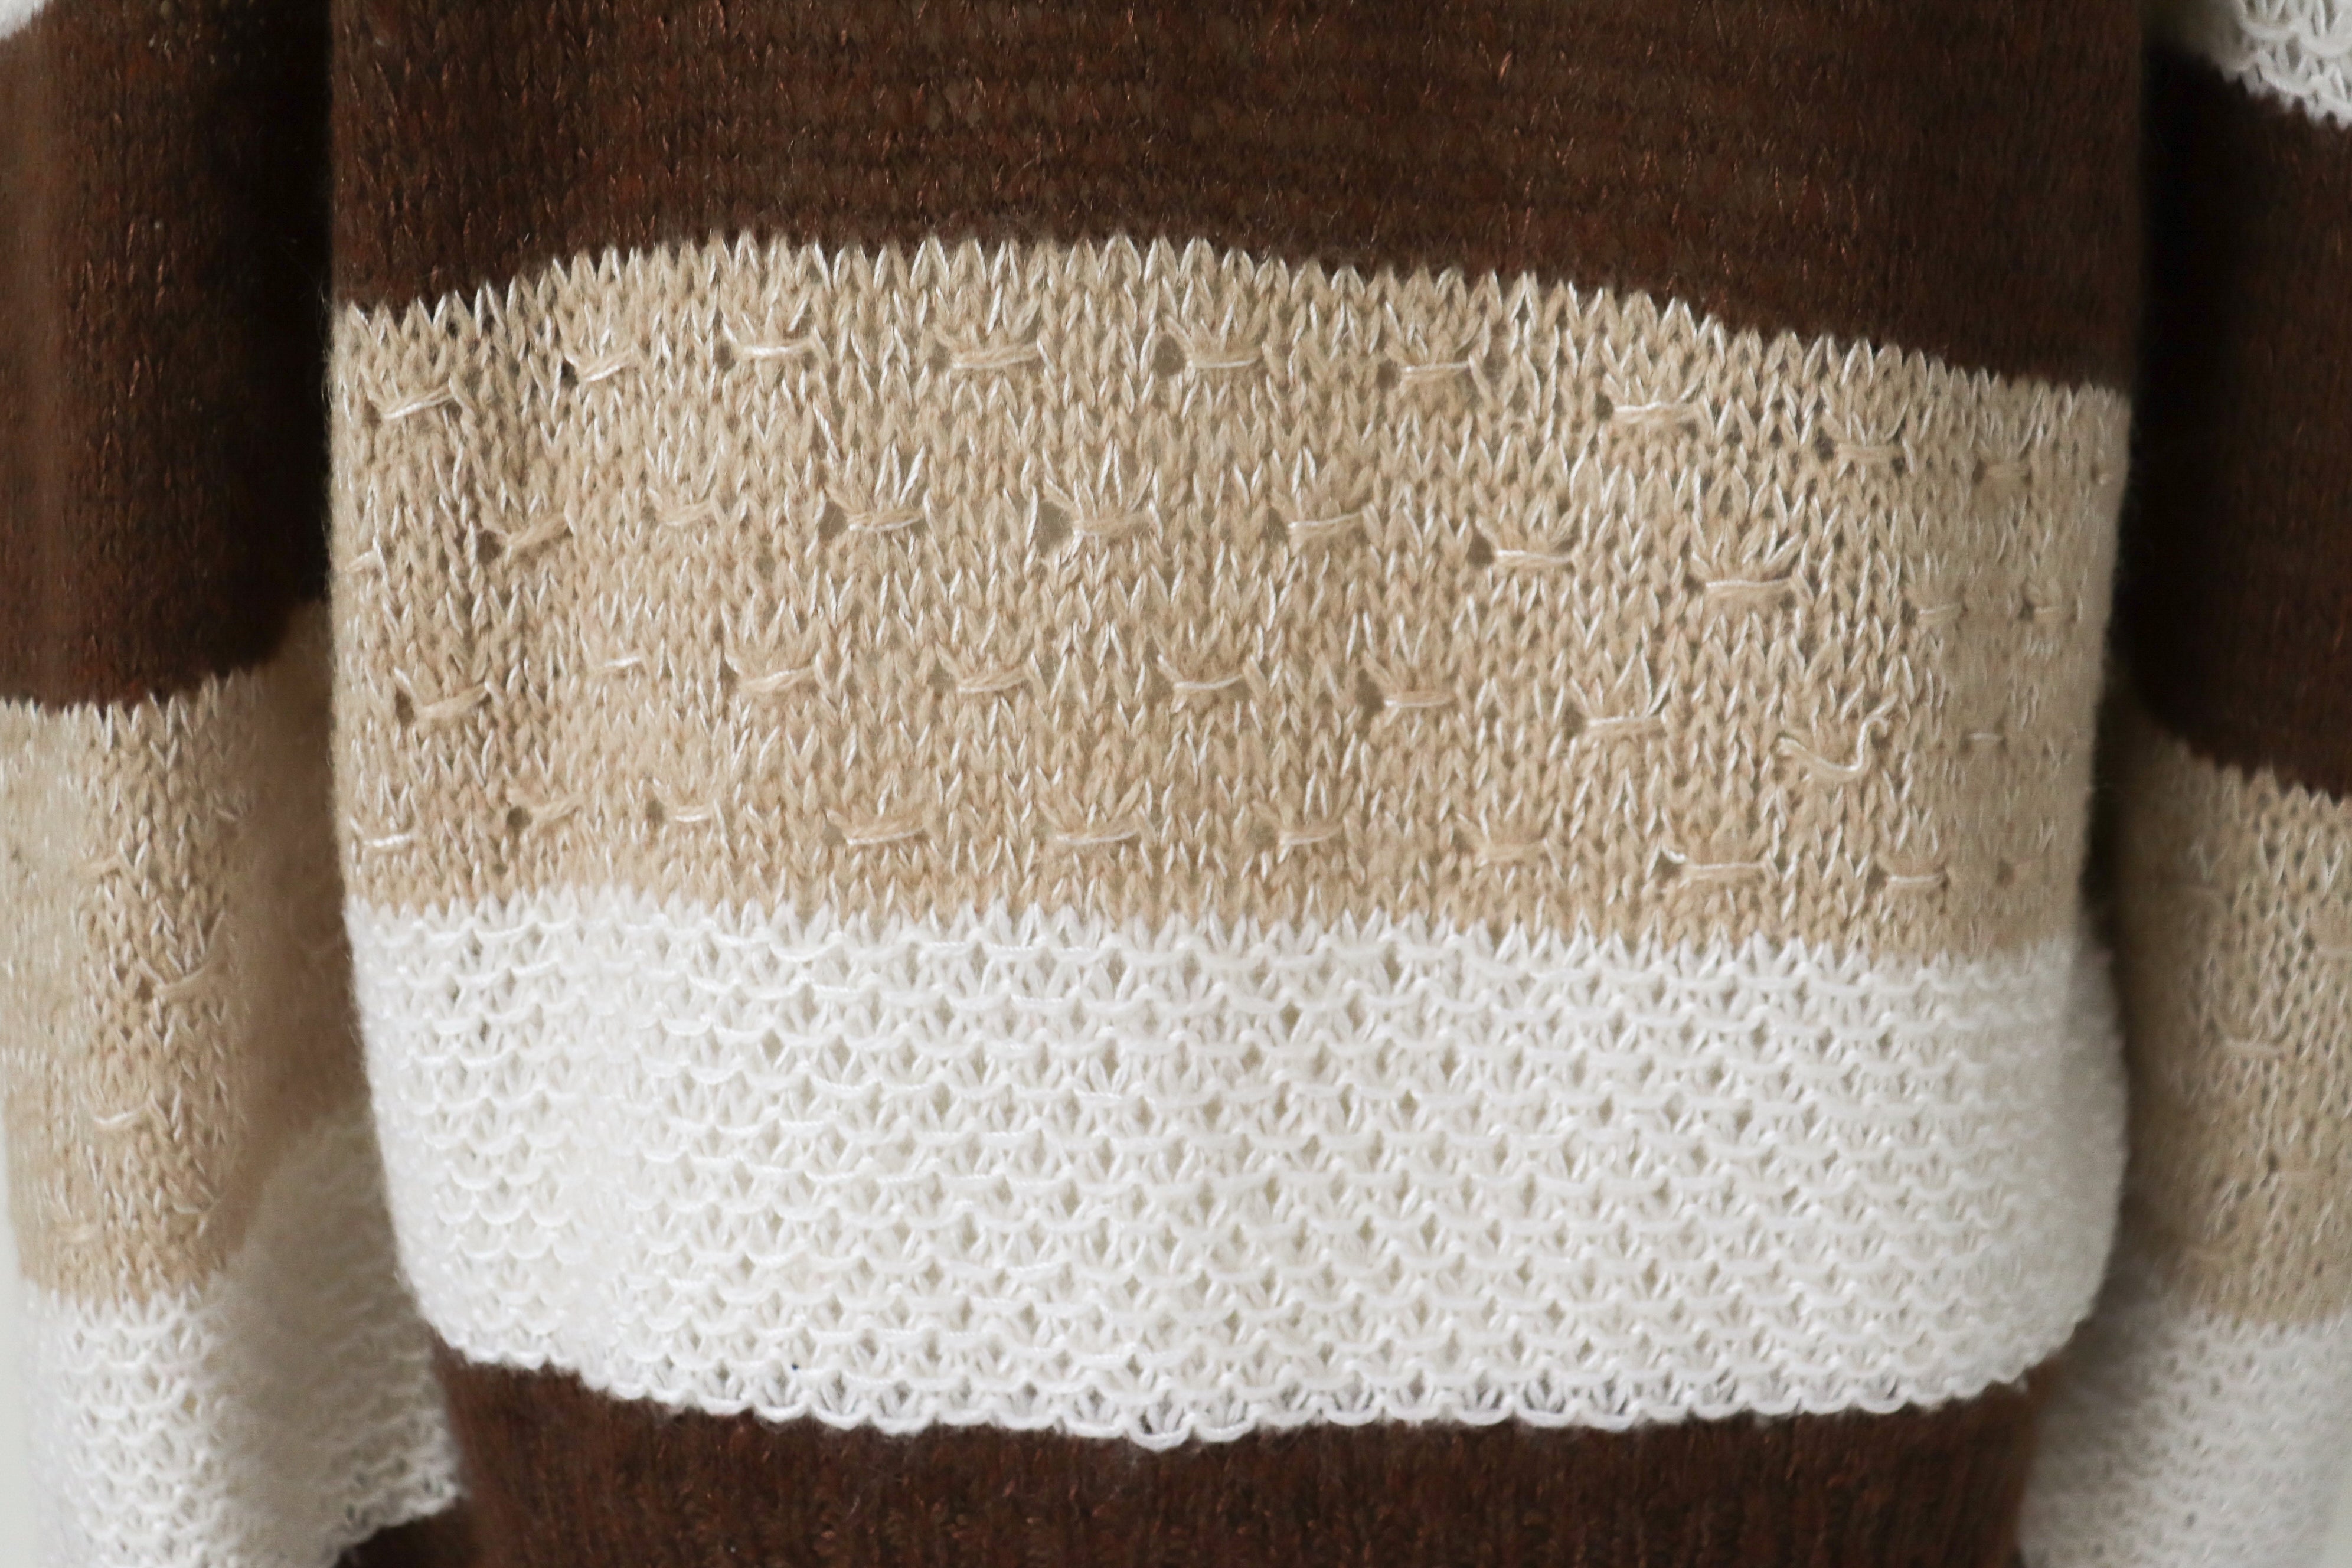 Vintage 1980s Hand Knit Cardigan - 1940s  Shape - Wool Blend - M / UK 12